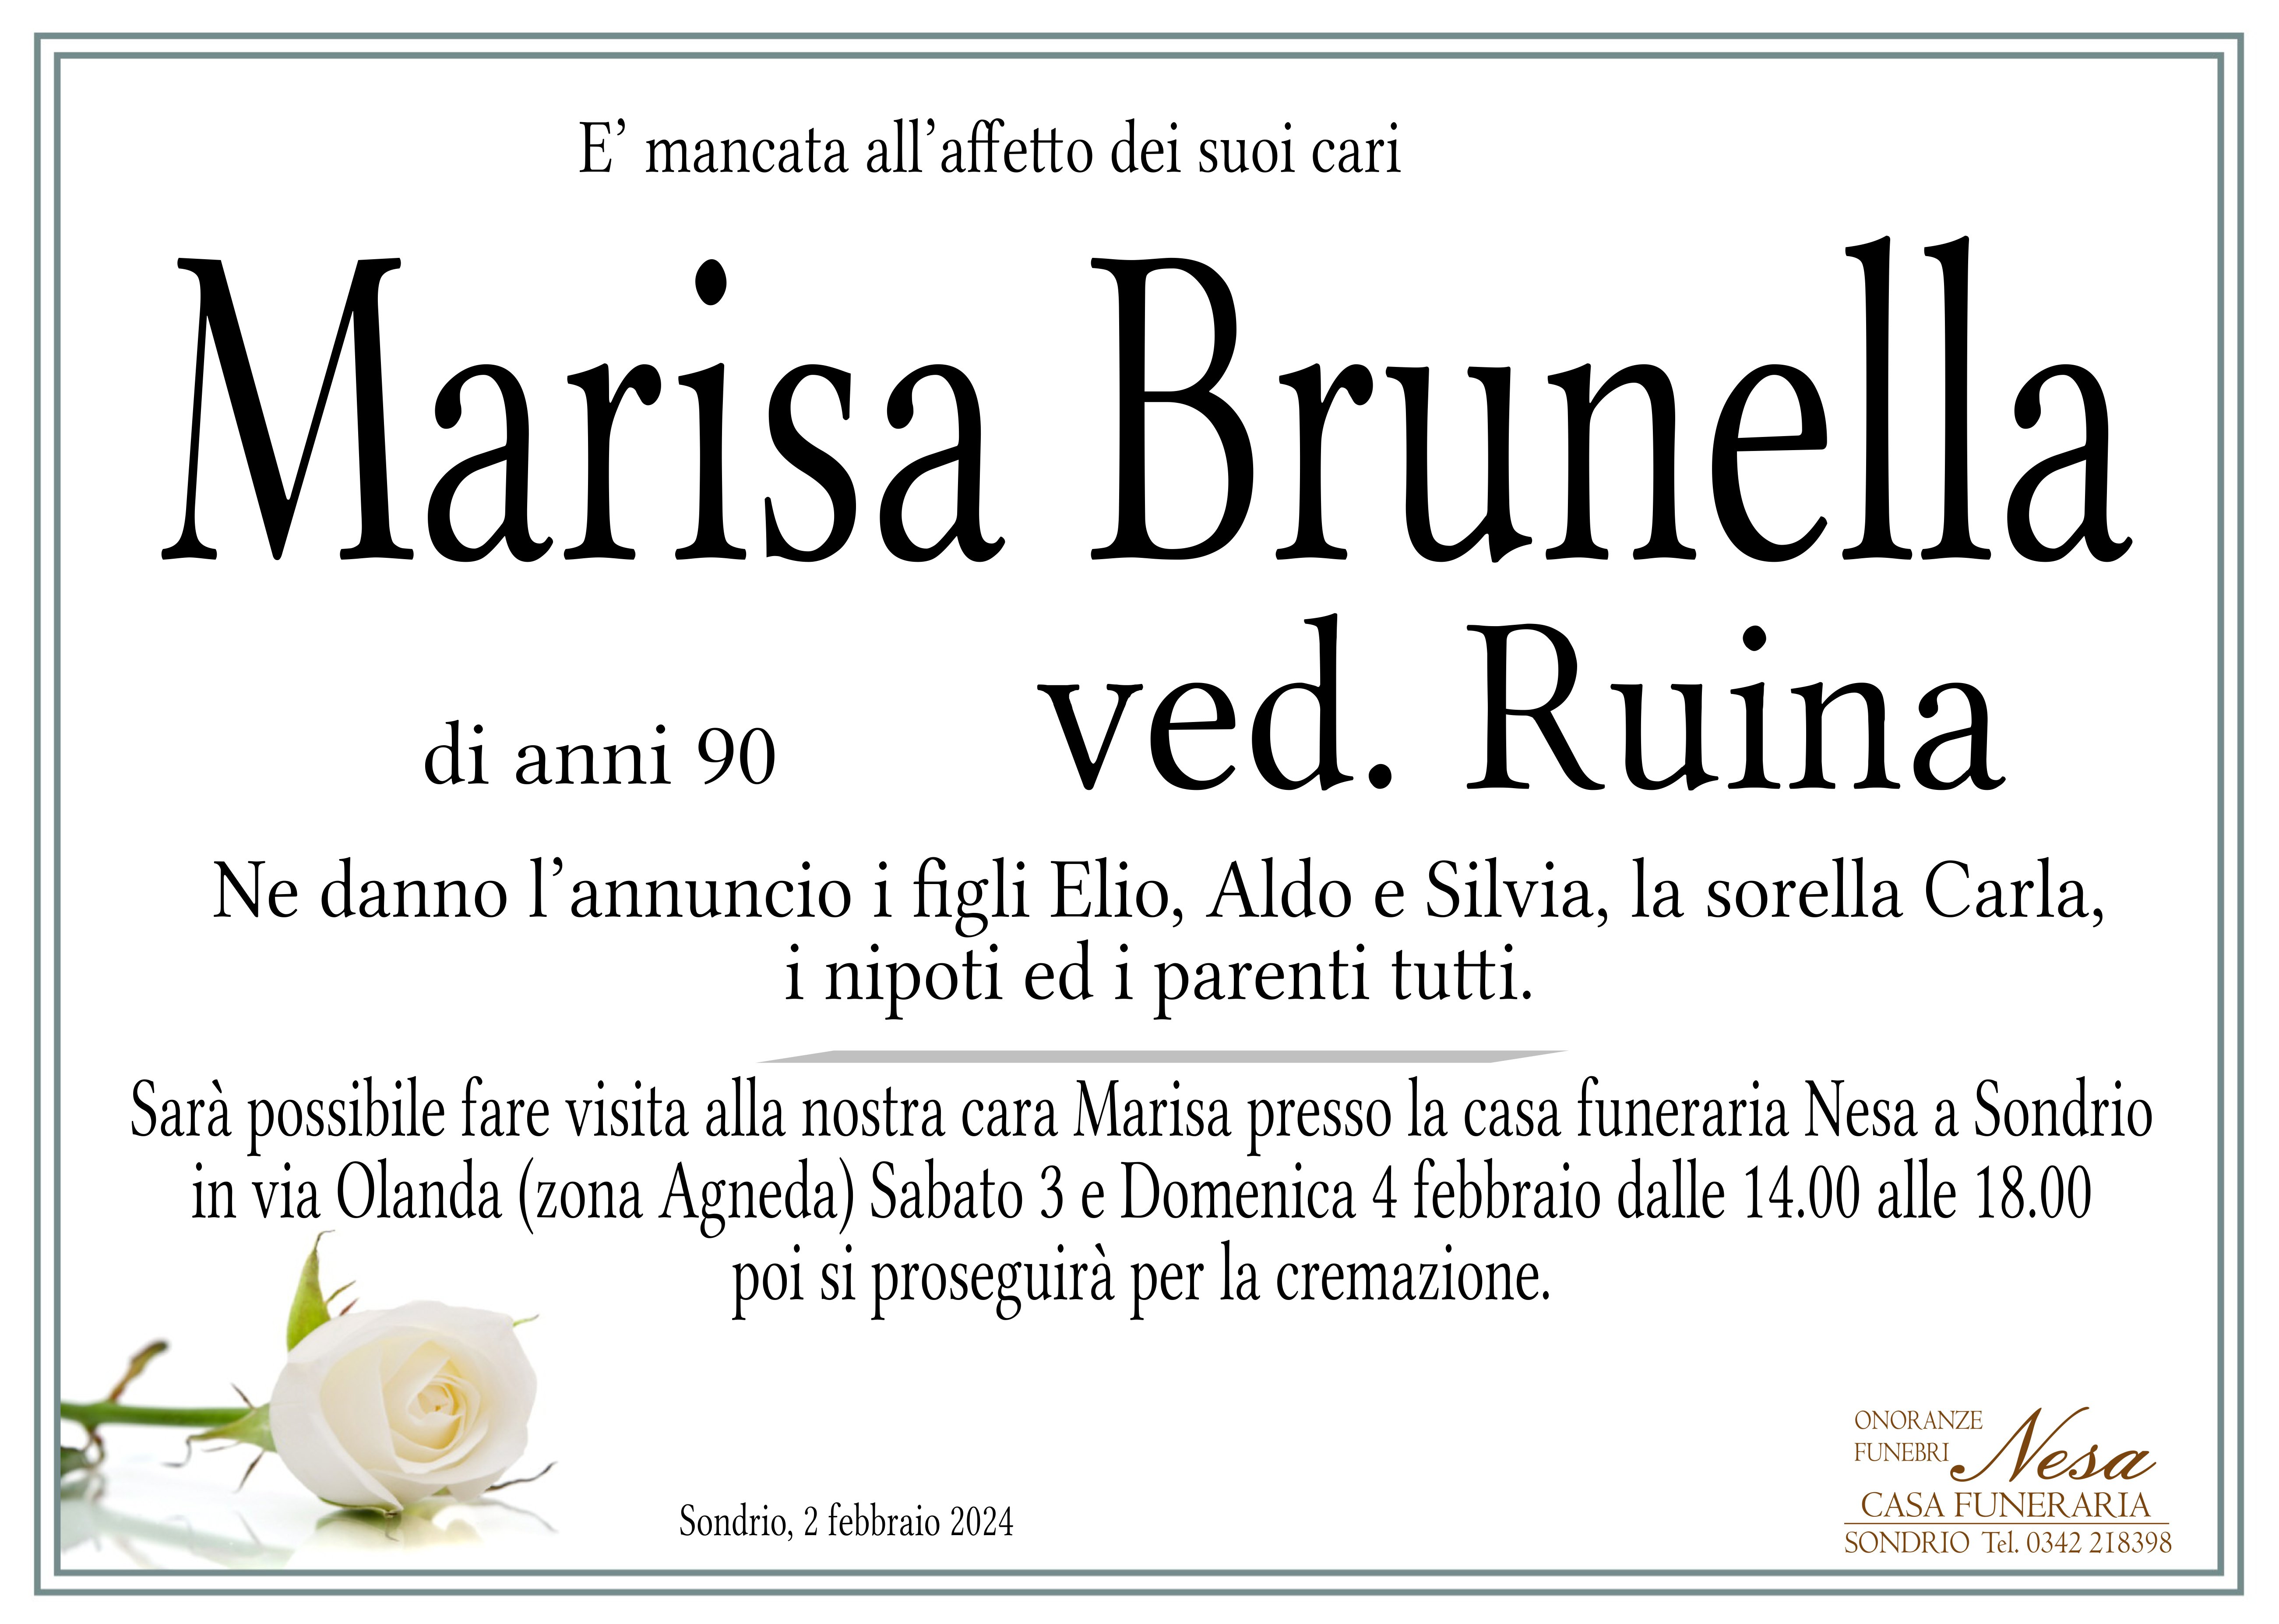 Necrologio Marisa Brunella ved. Ruina